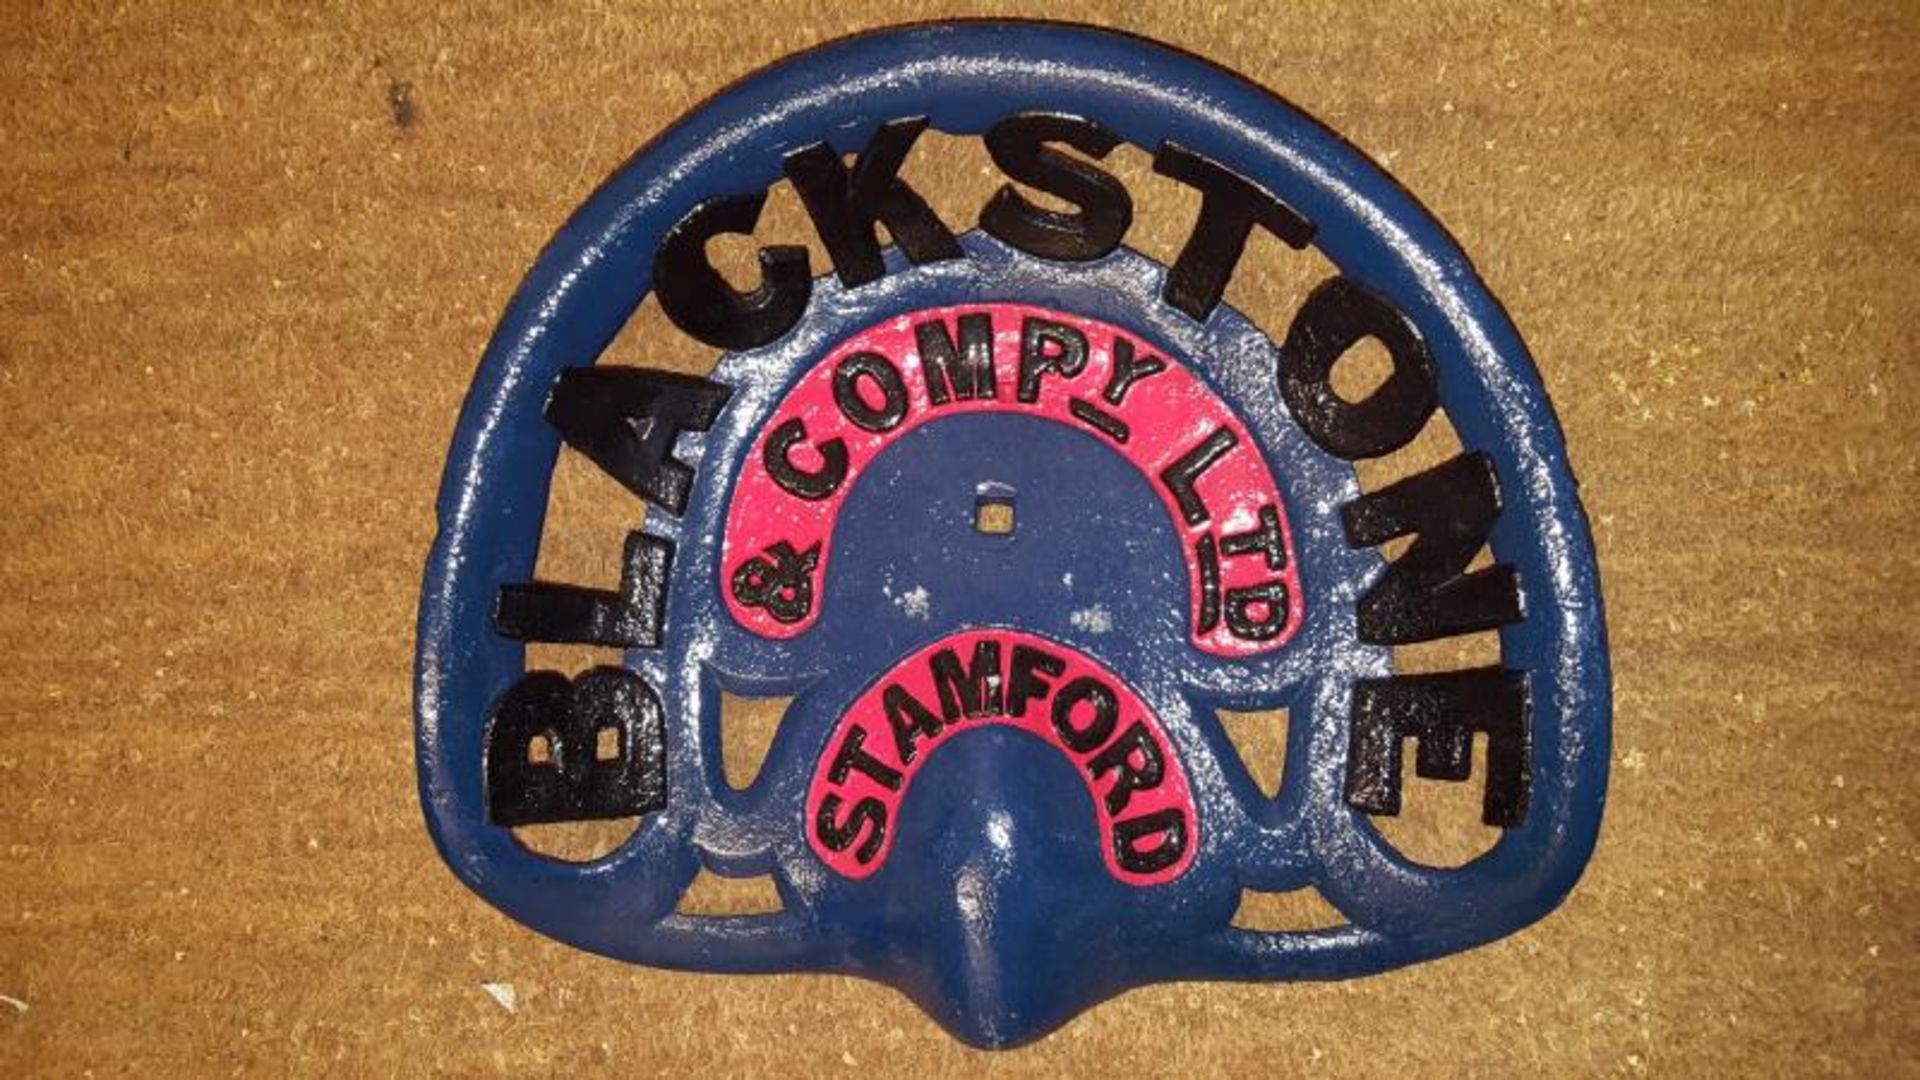 Blackstone 6993 - a cast iron seat